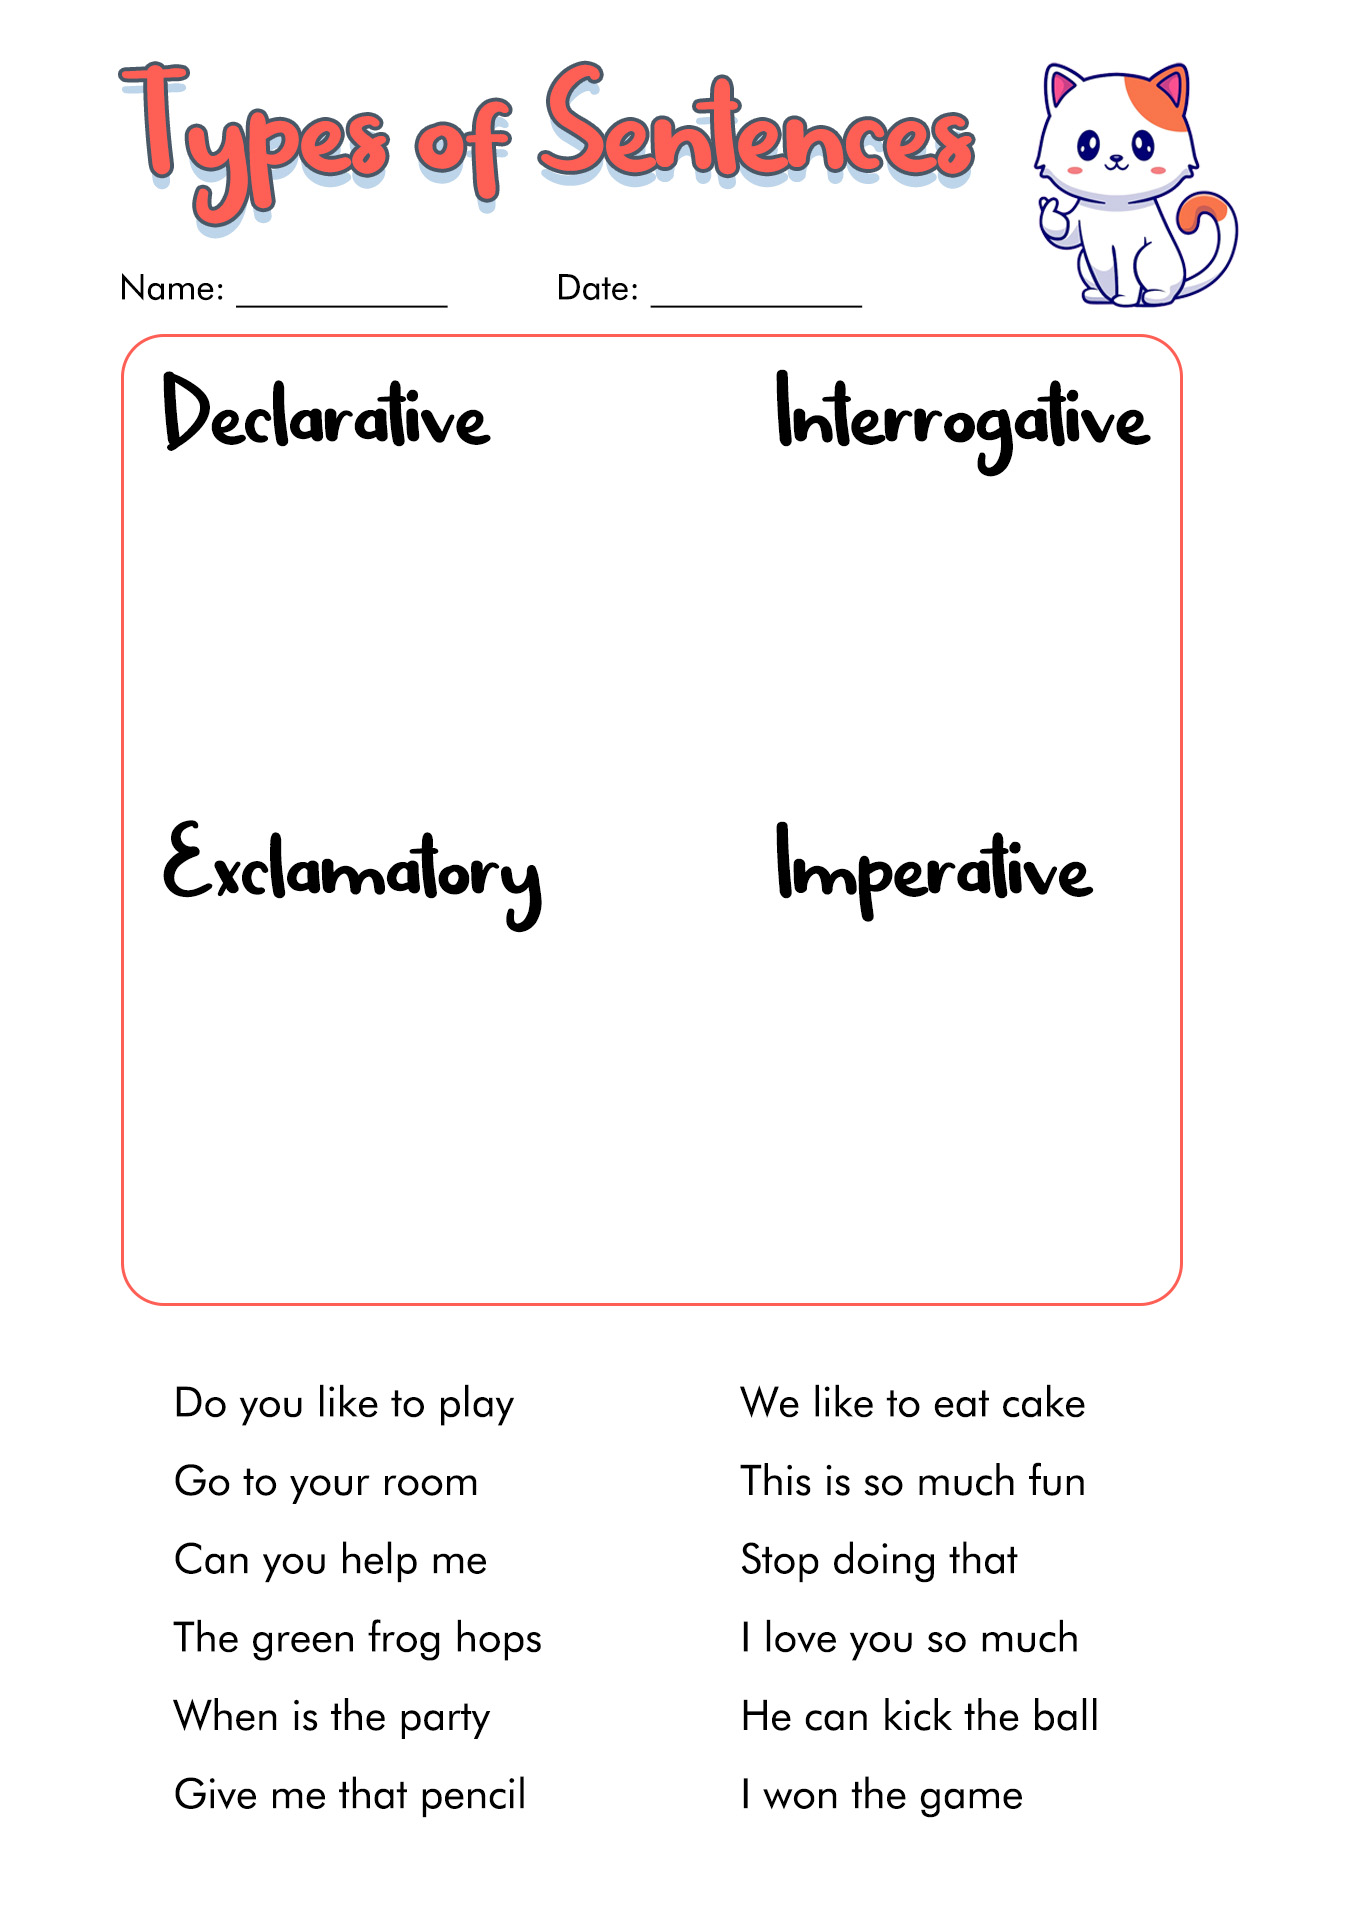 Types of Sentences Activities Image